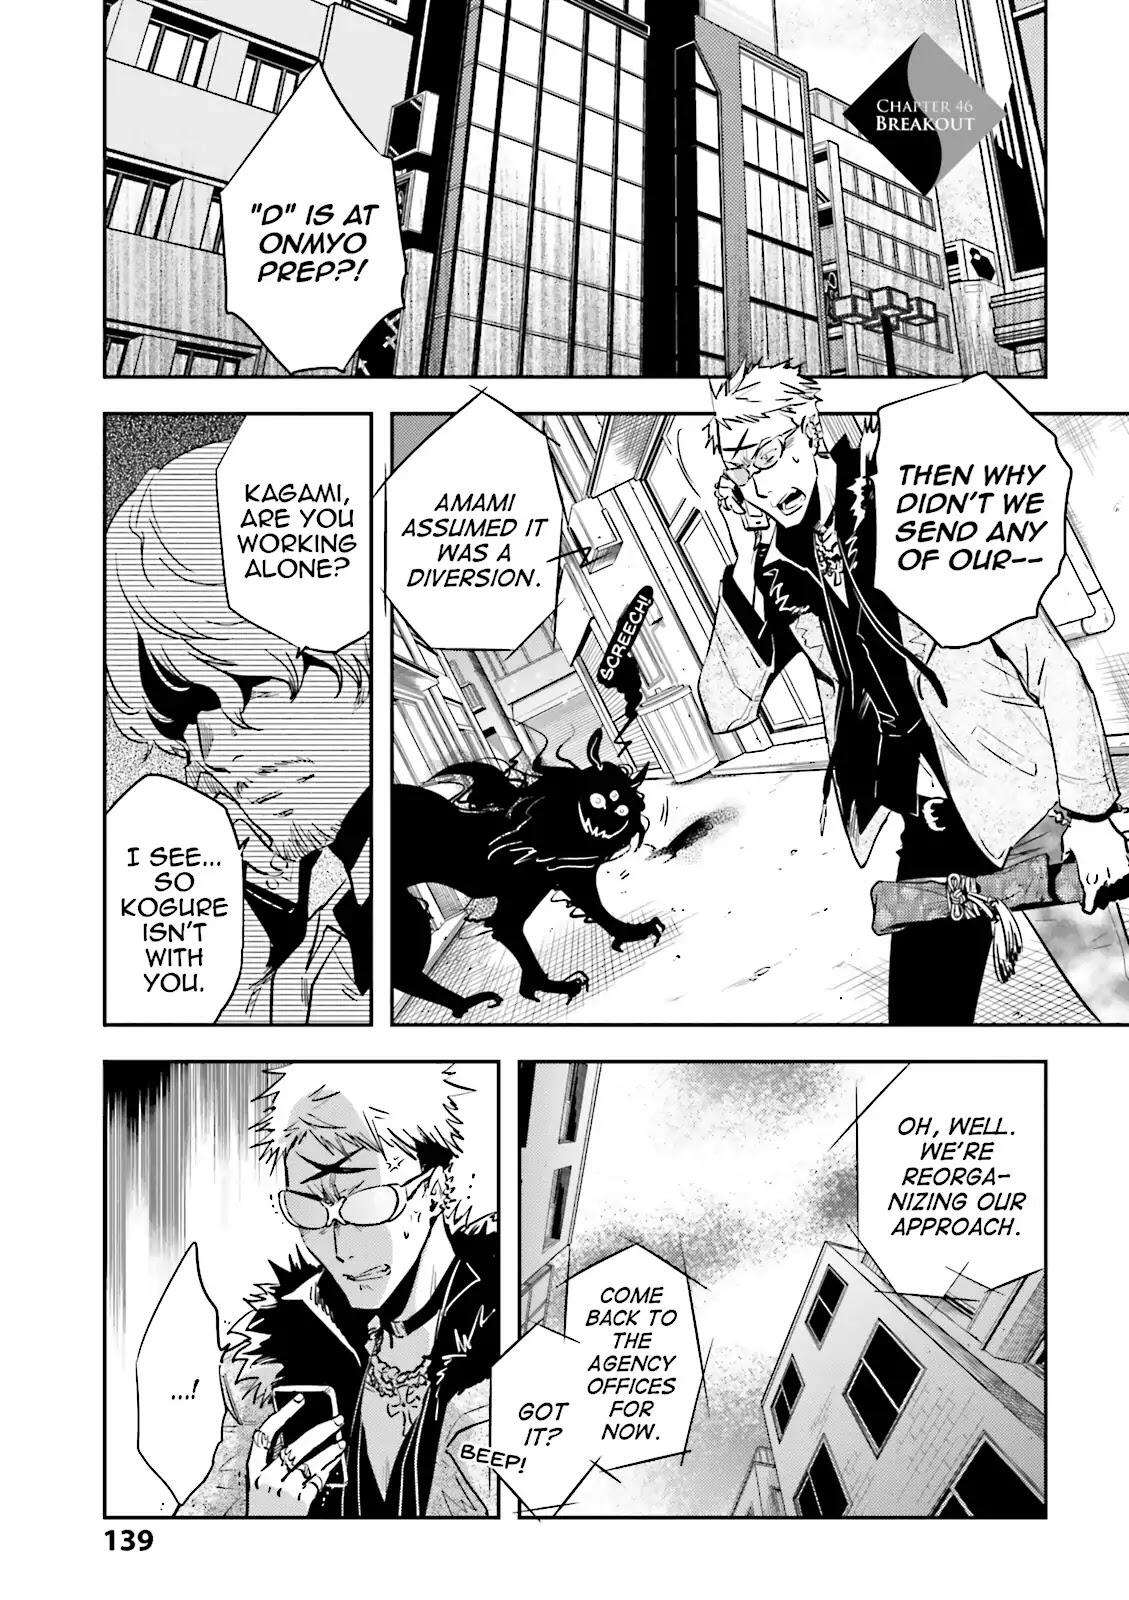 Read Tokyo Ravens Chapter 55: The Details on Mangakakalot